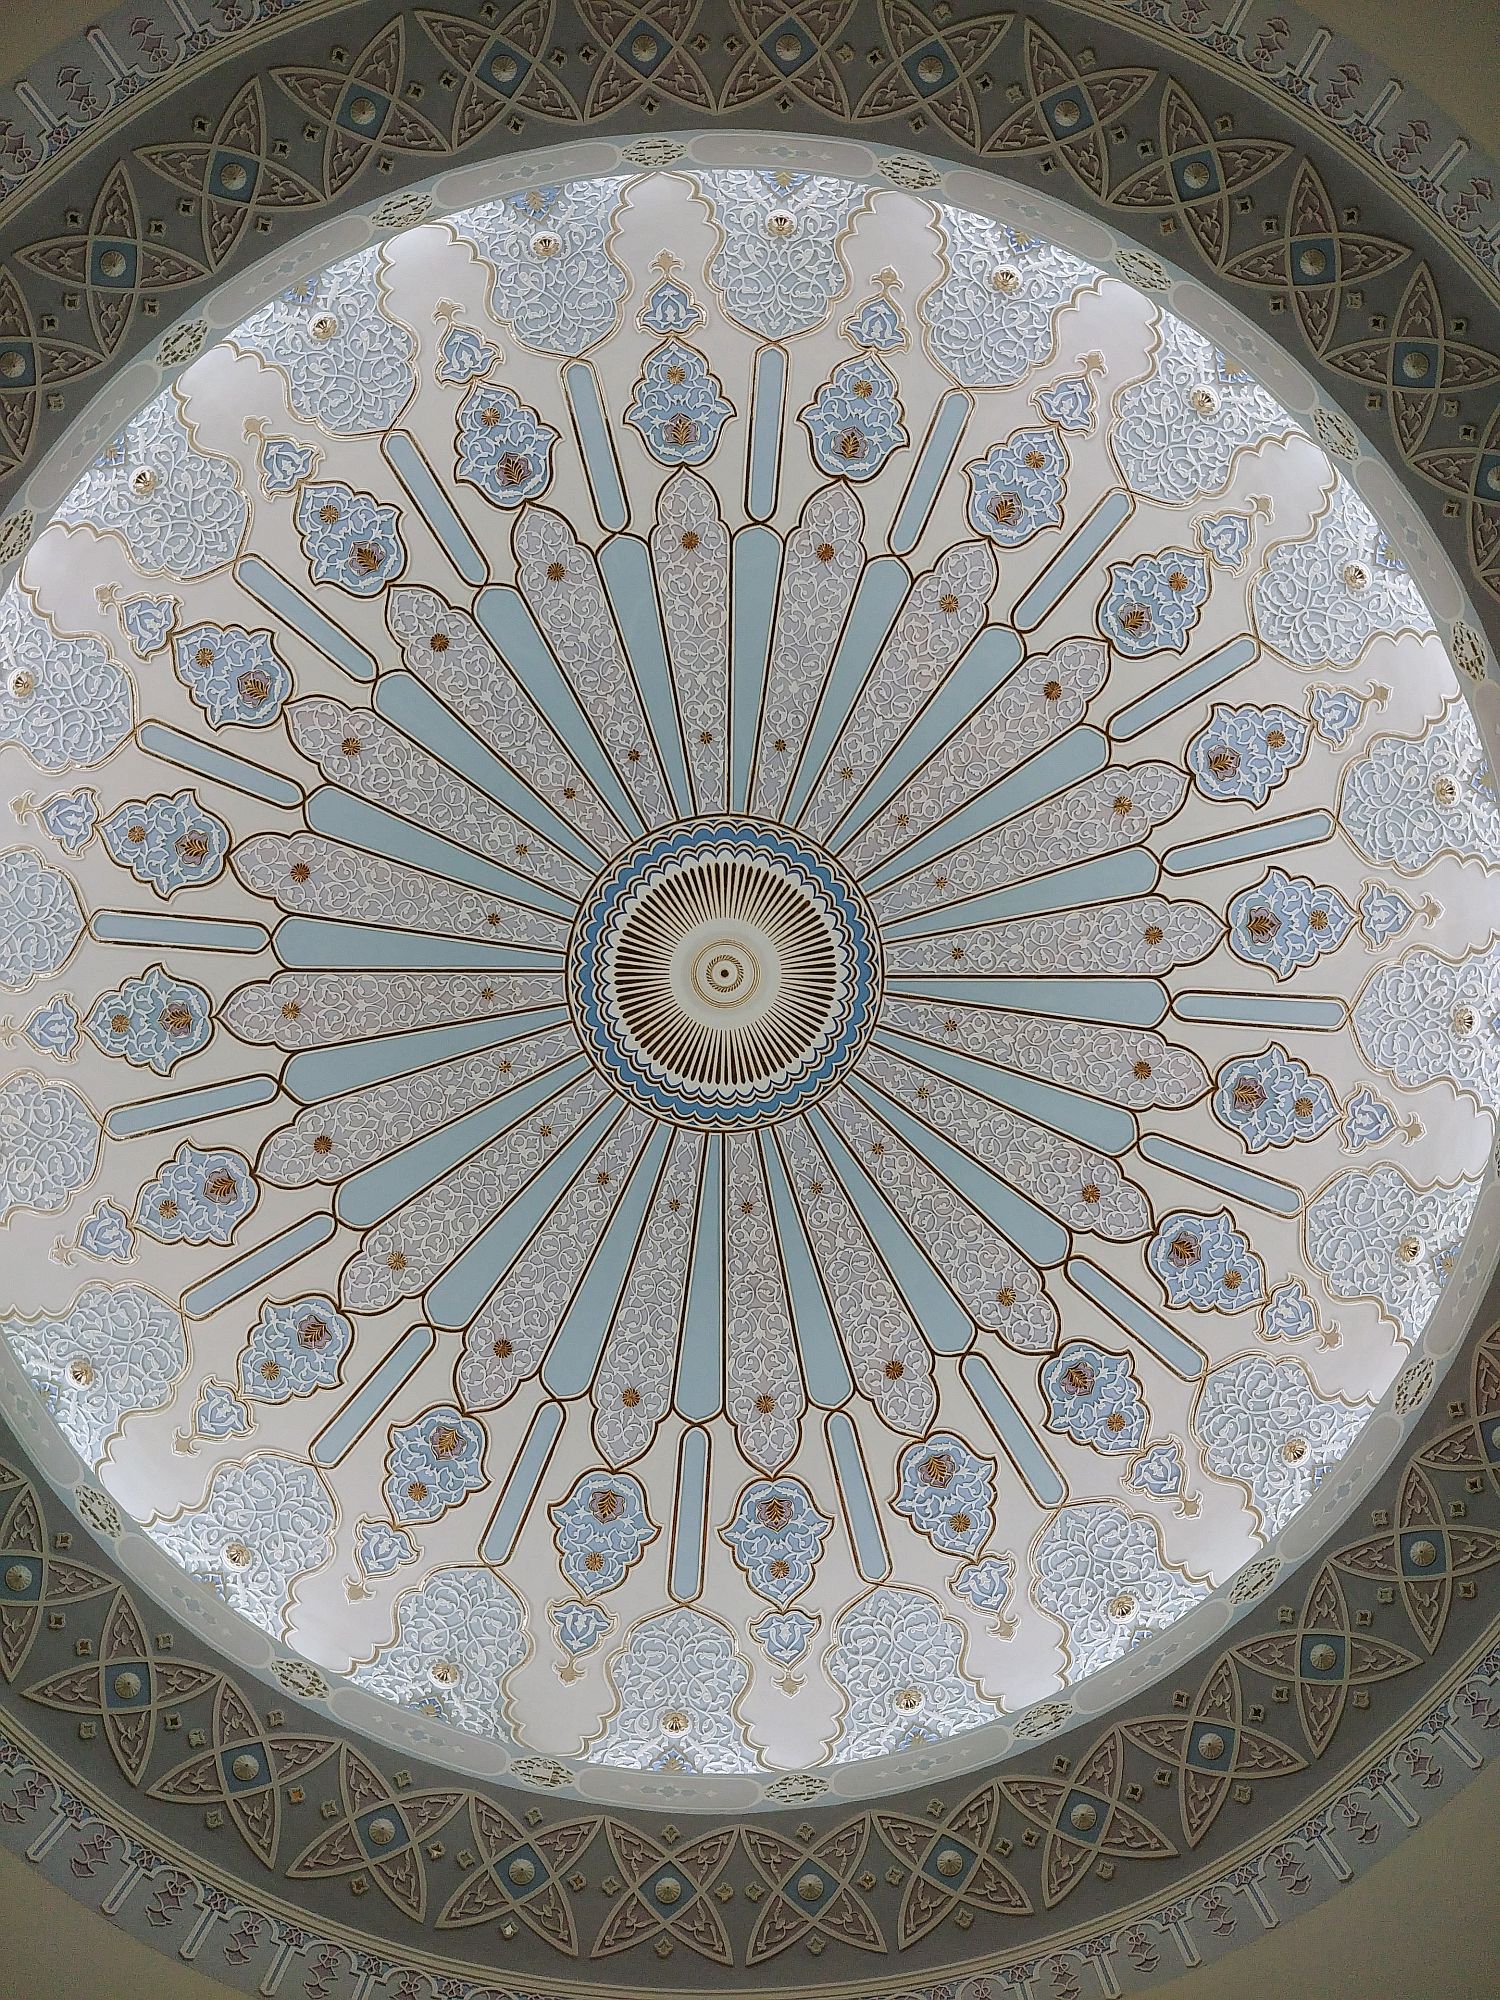 KL - Islamic Arts Museum - Blue cupola